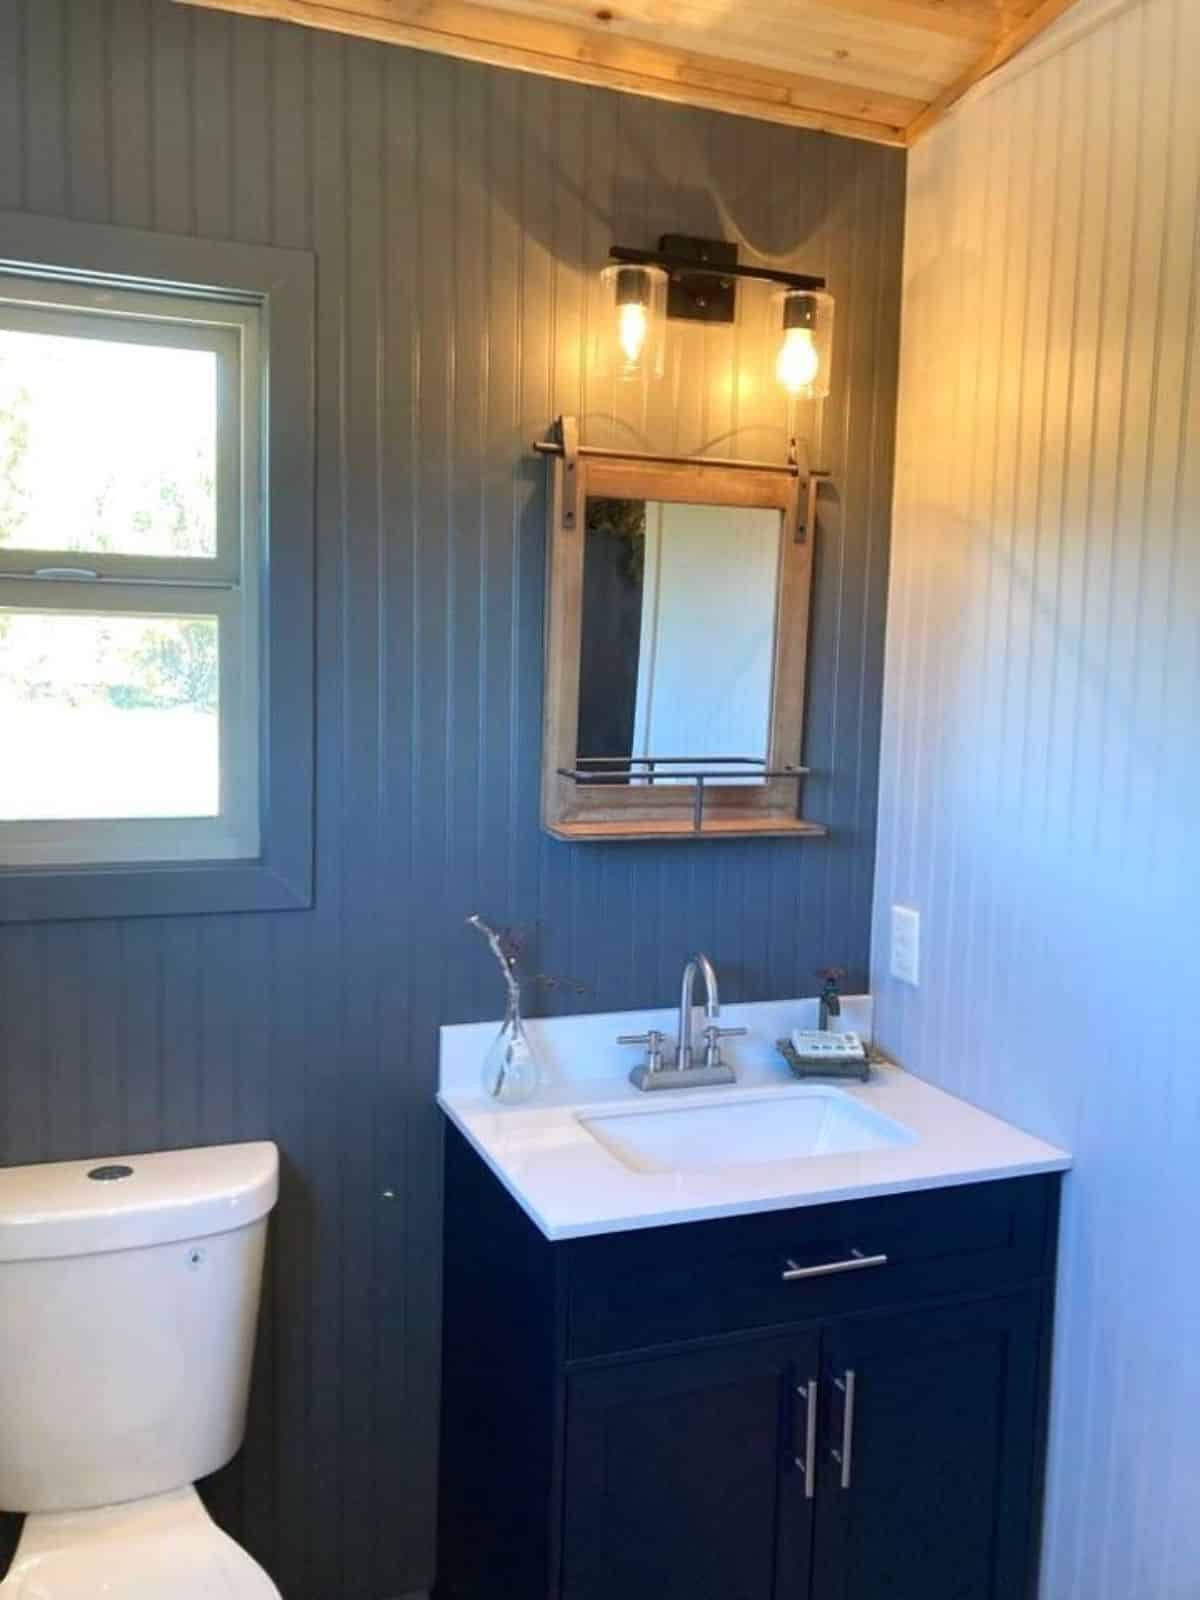 bathroom of custom mobile home has all the standard fittings